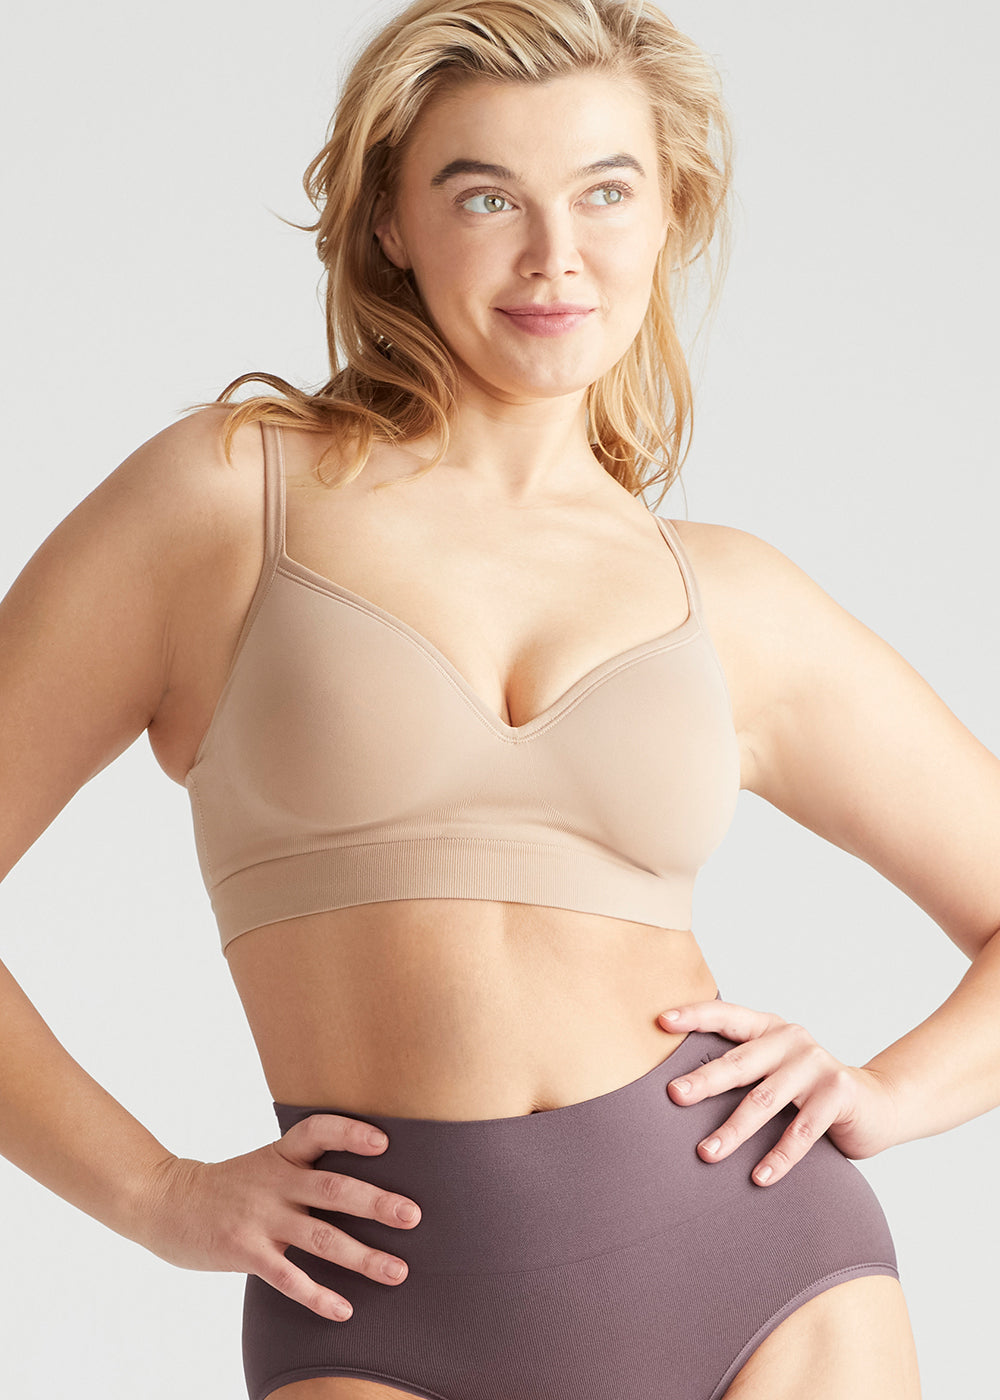 Wholesale bra size 32dd For Supportive Underwear 